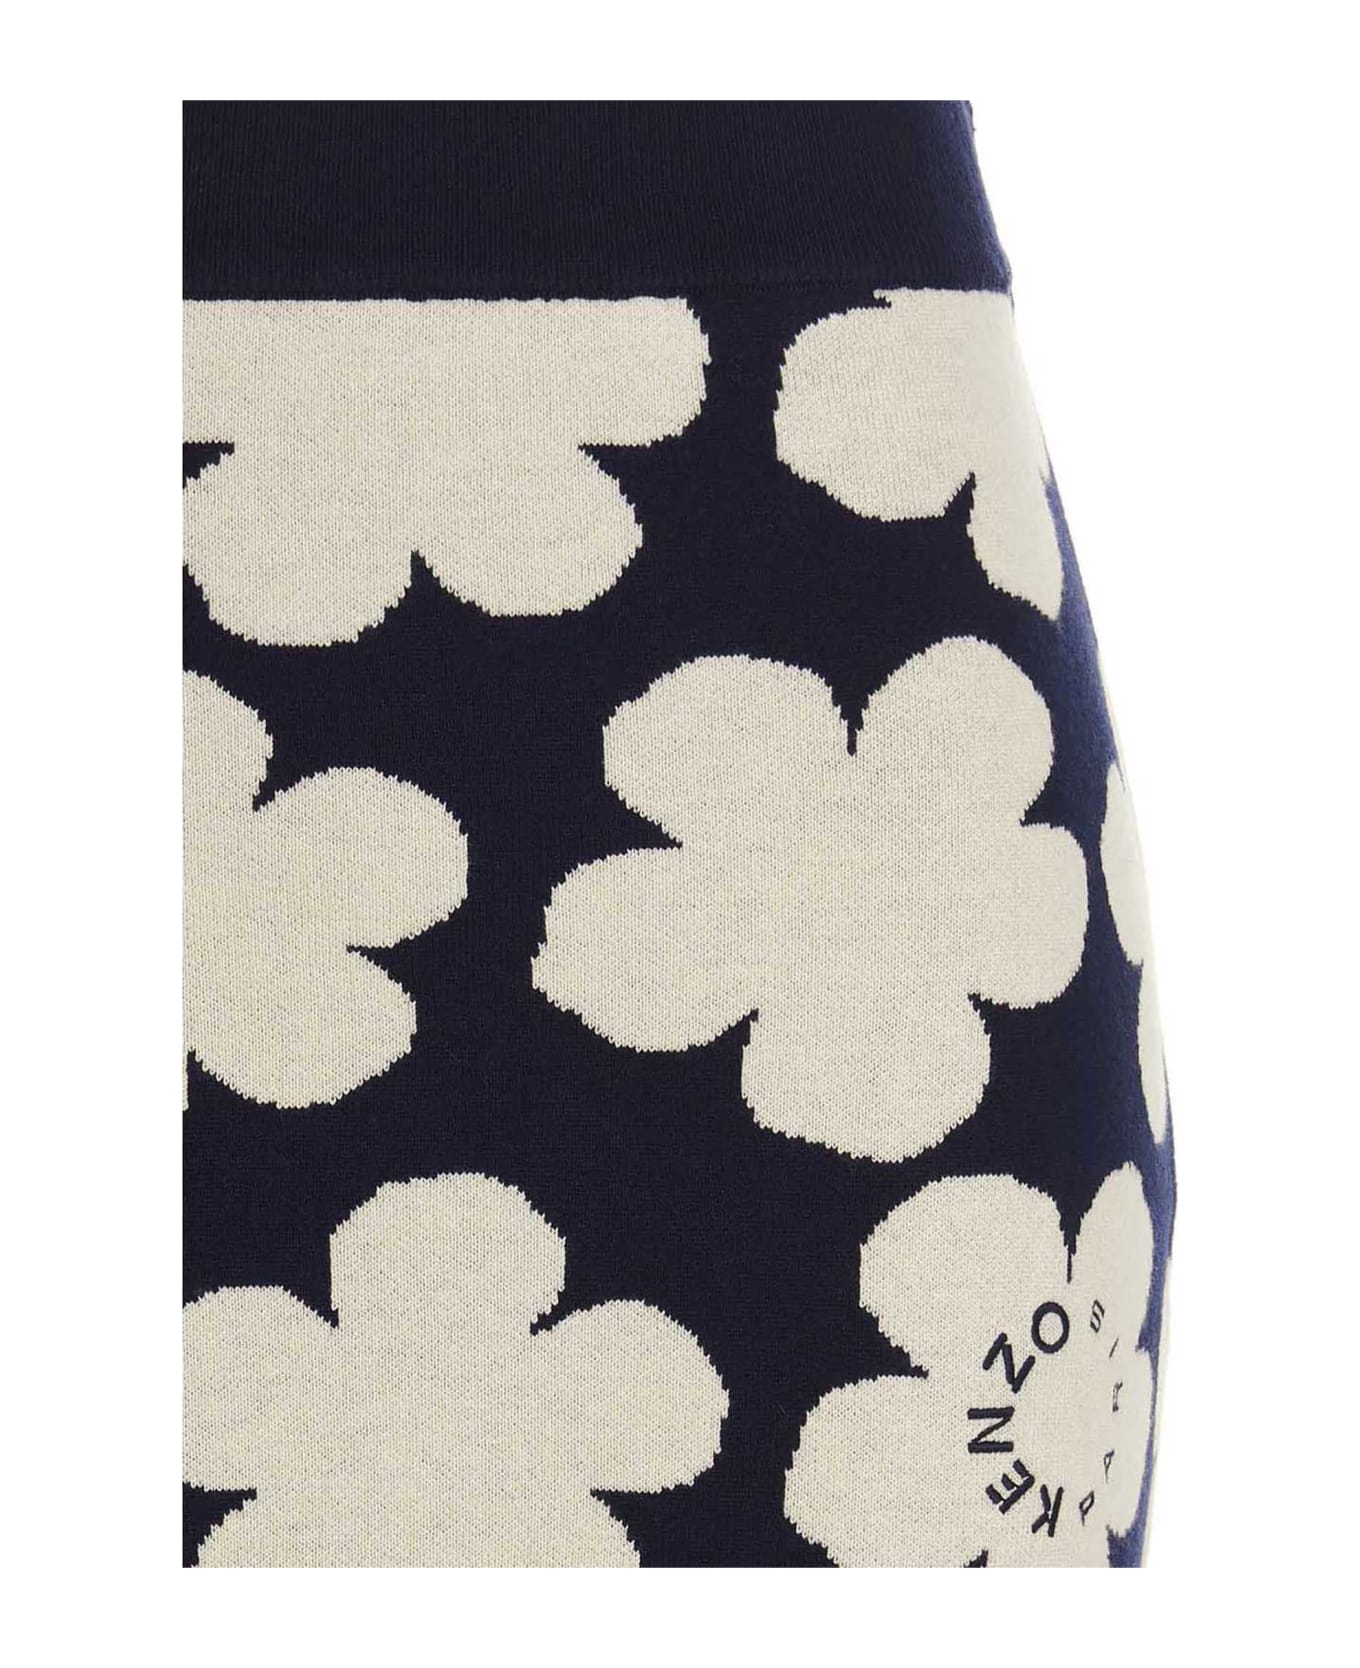 Kenzo Floral Patterned Mini Skirt - Blue